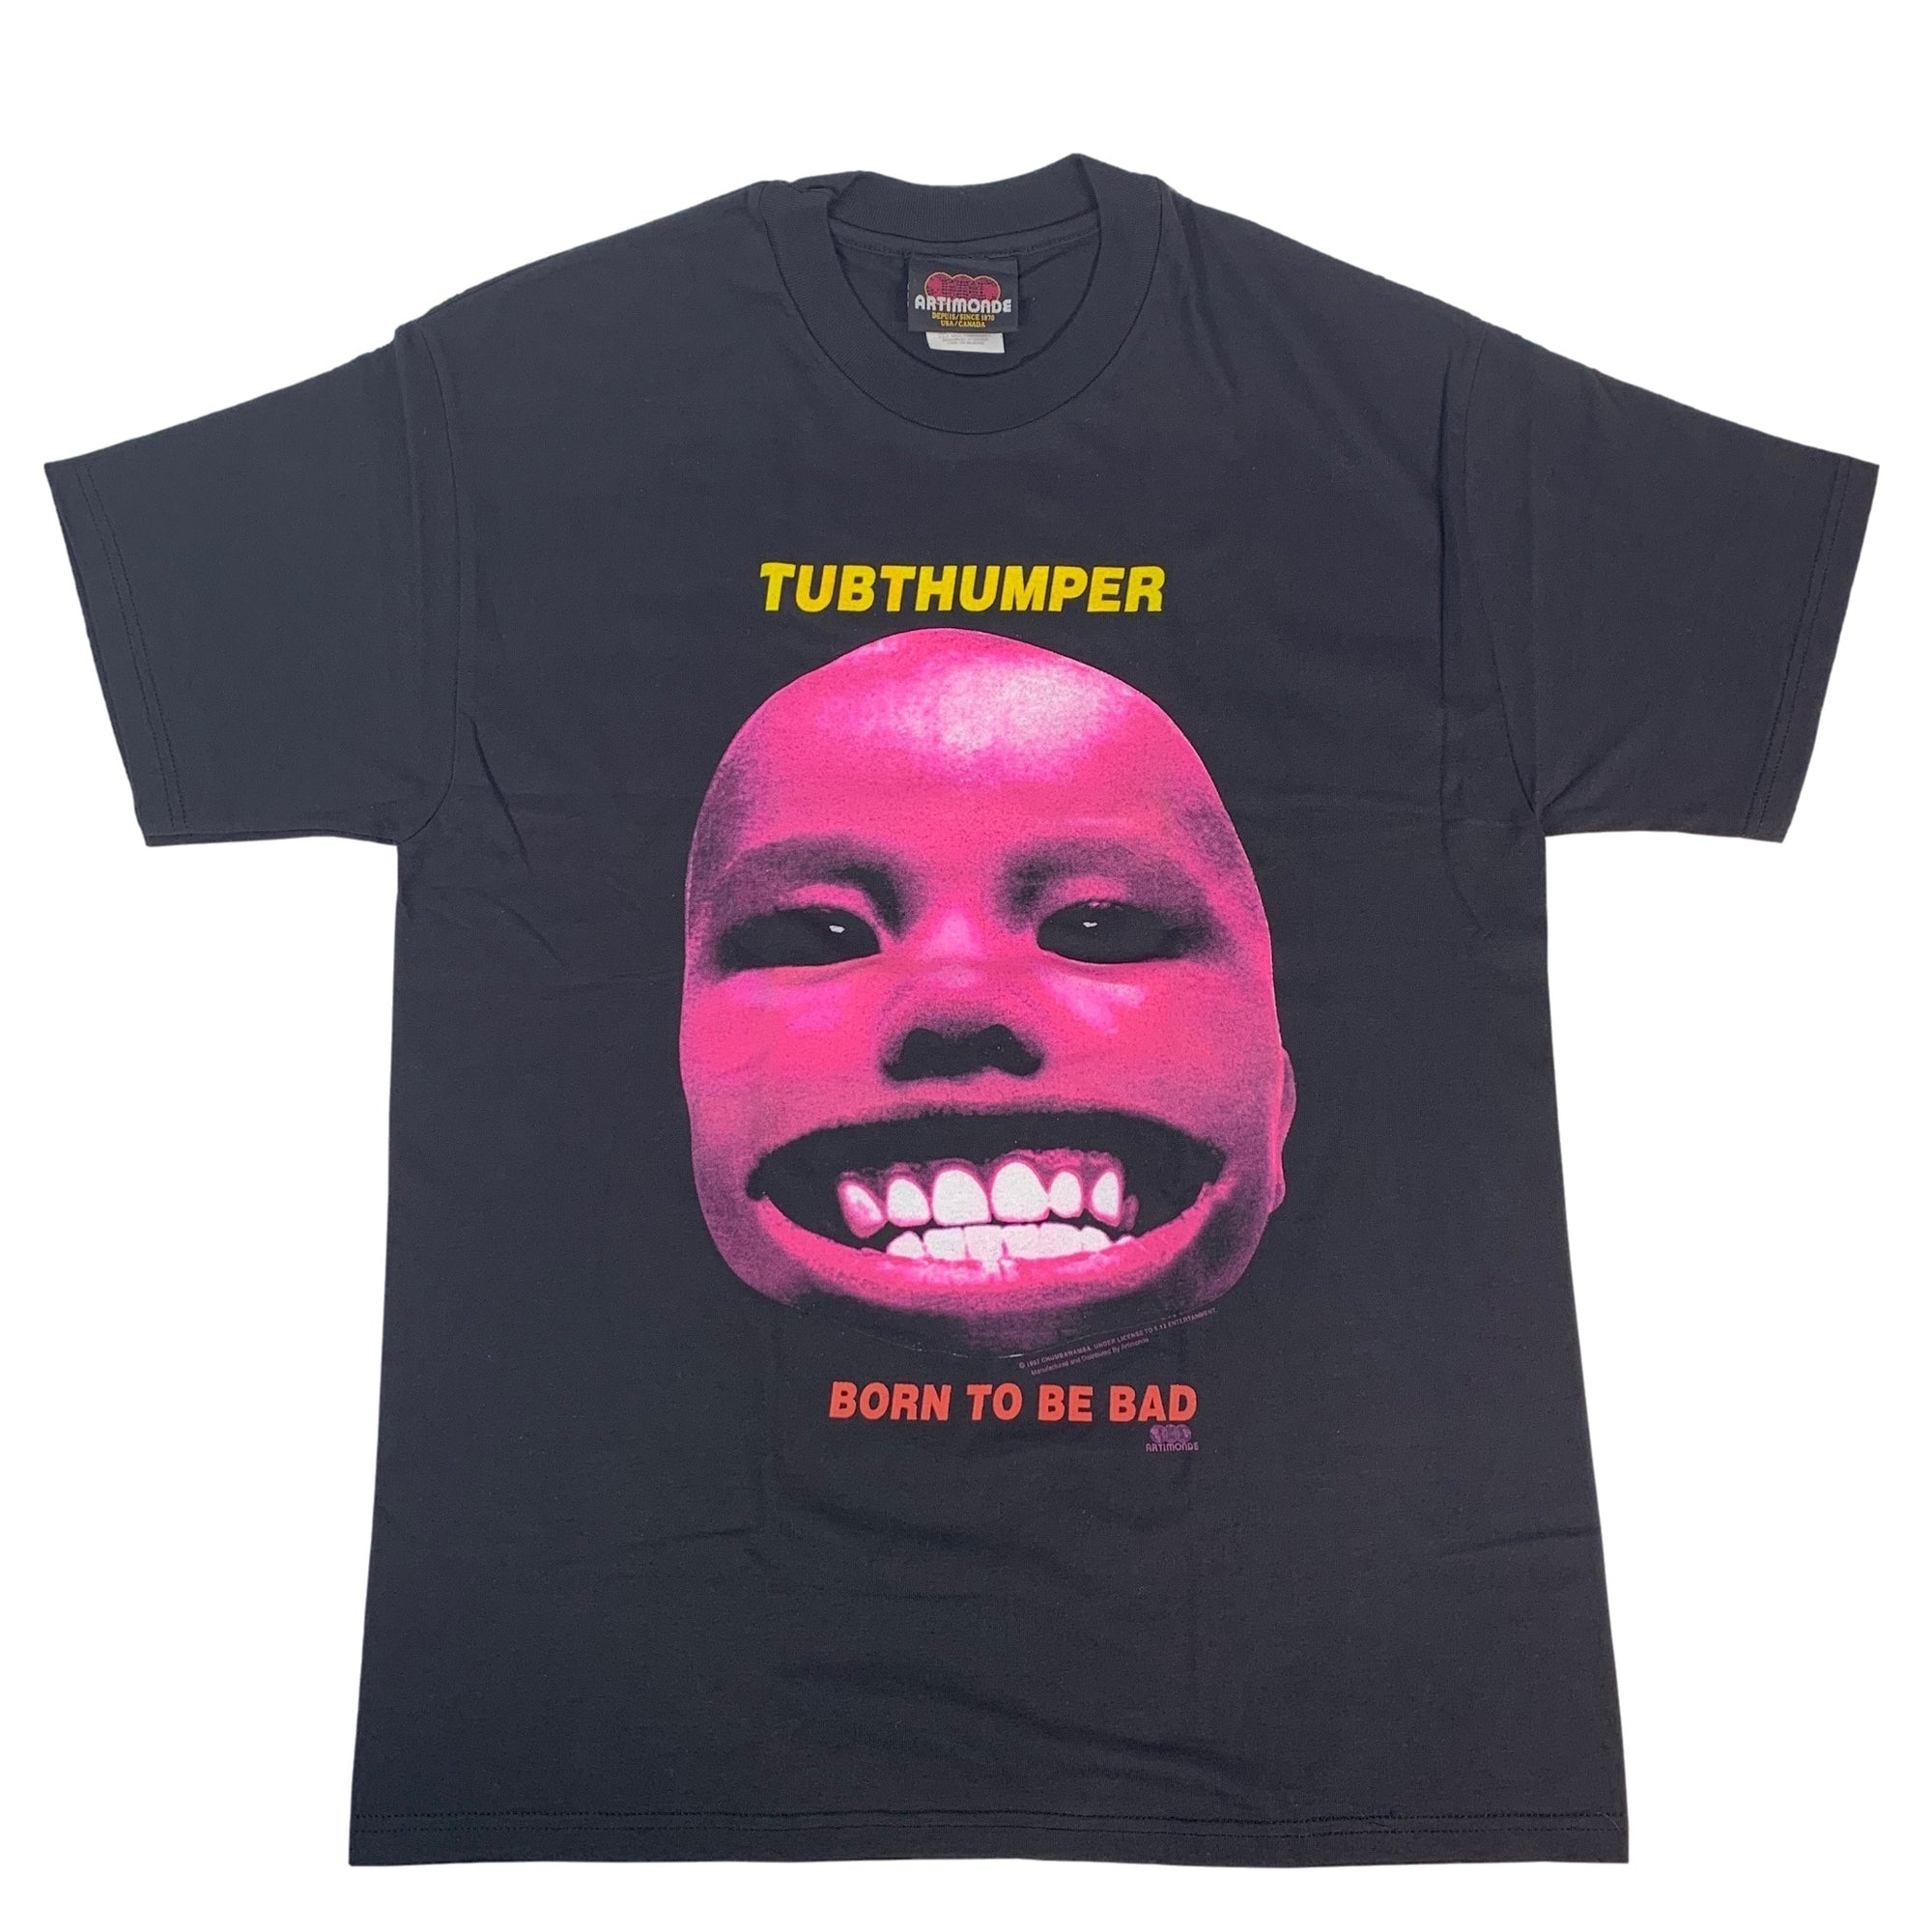 Vintage Chumbawamba "Tubthumper" T-Shirt - jointcustodydc